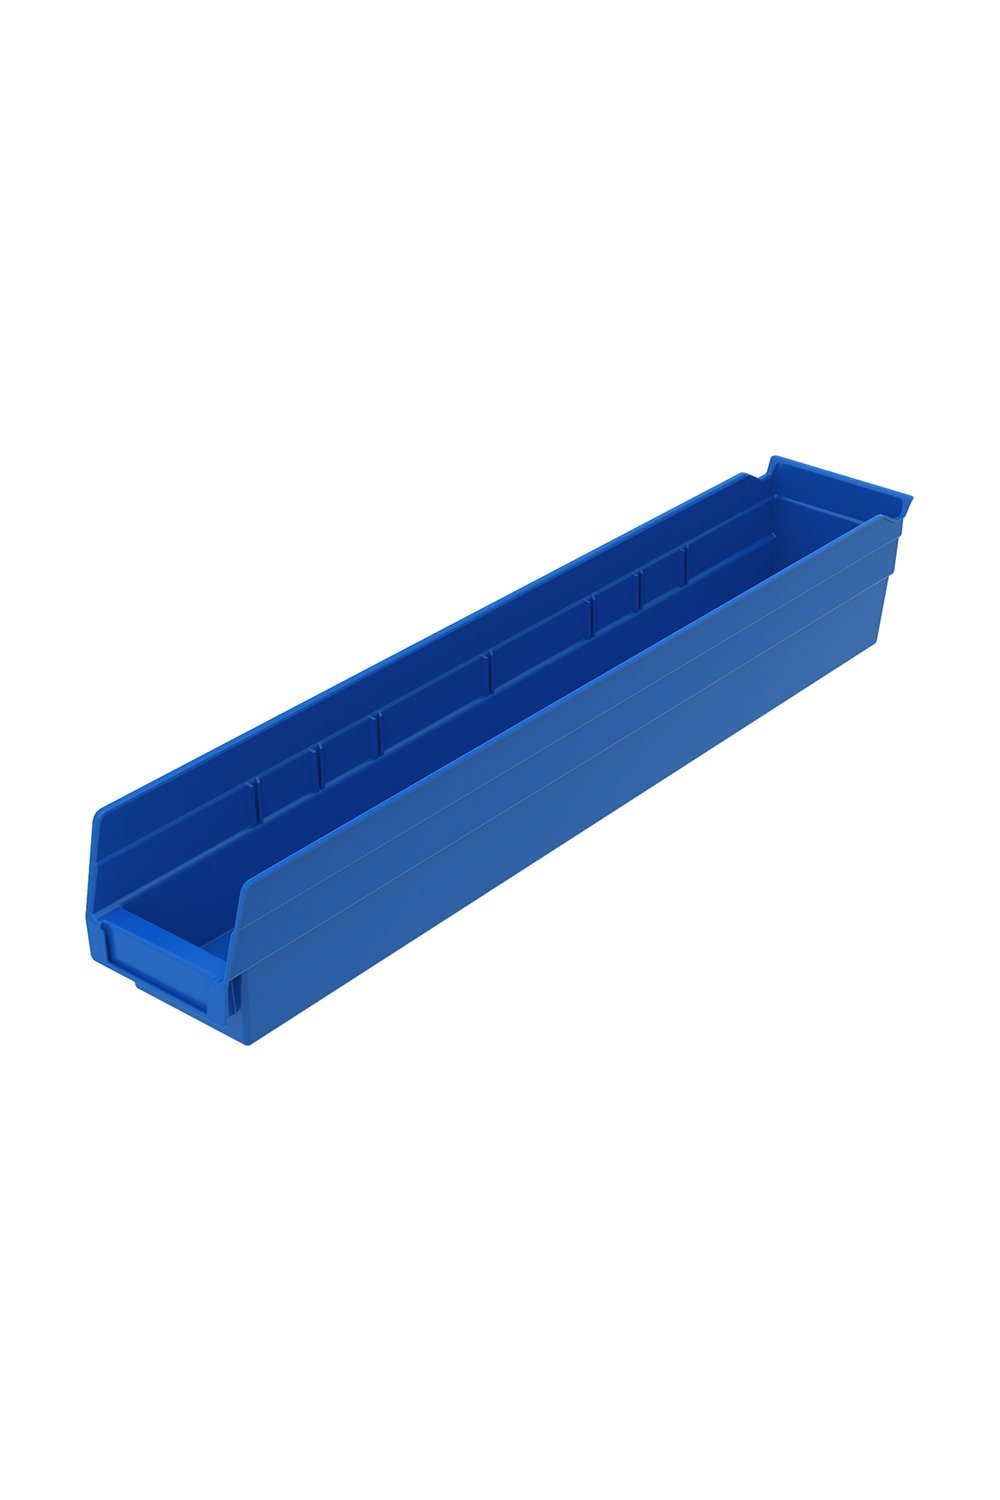 Shelf Bin for 24"D Shelves Bins & Containers Acart 23-5/8'' x 4-1/8'' x 4'' Blue 